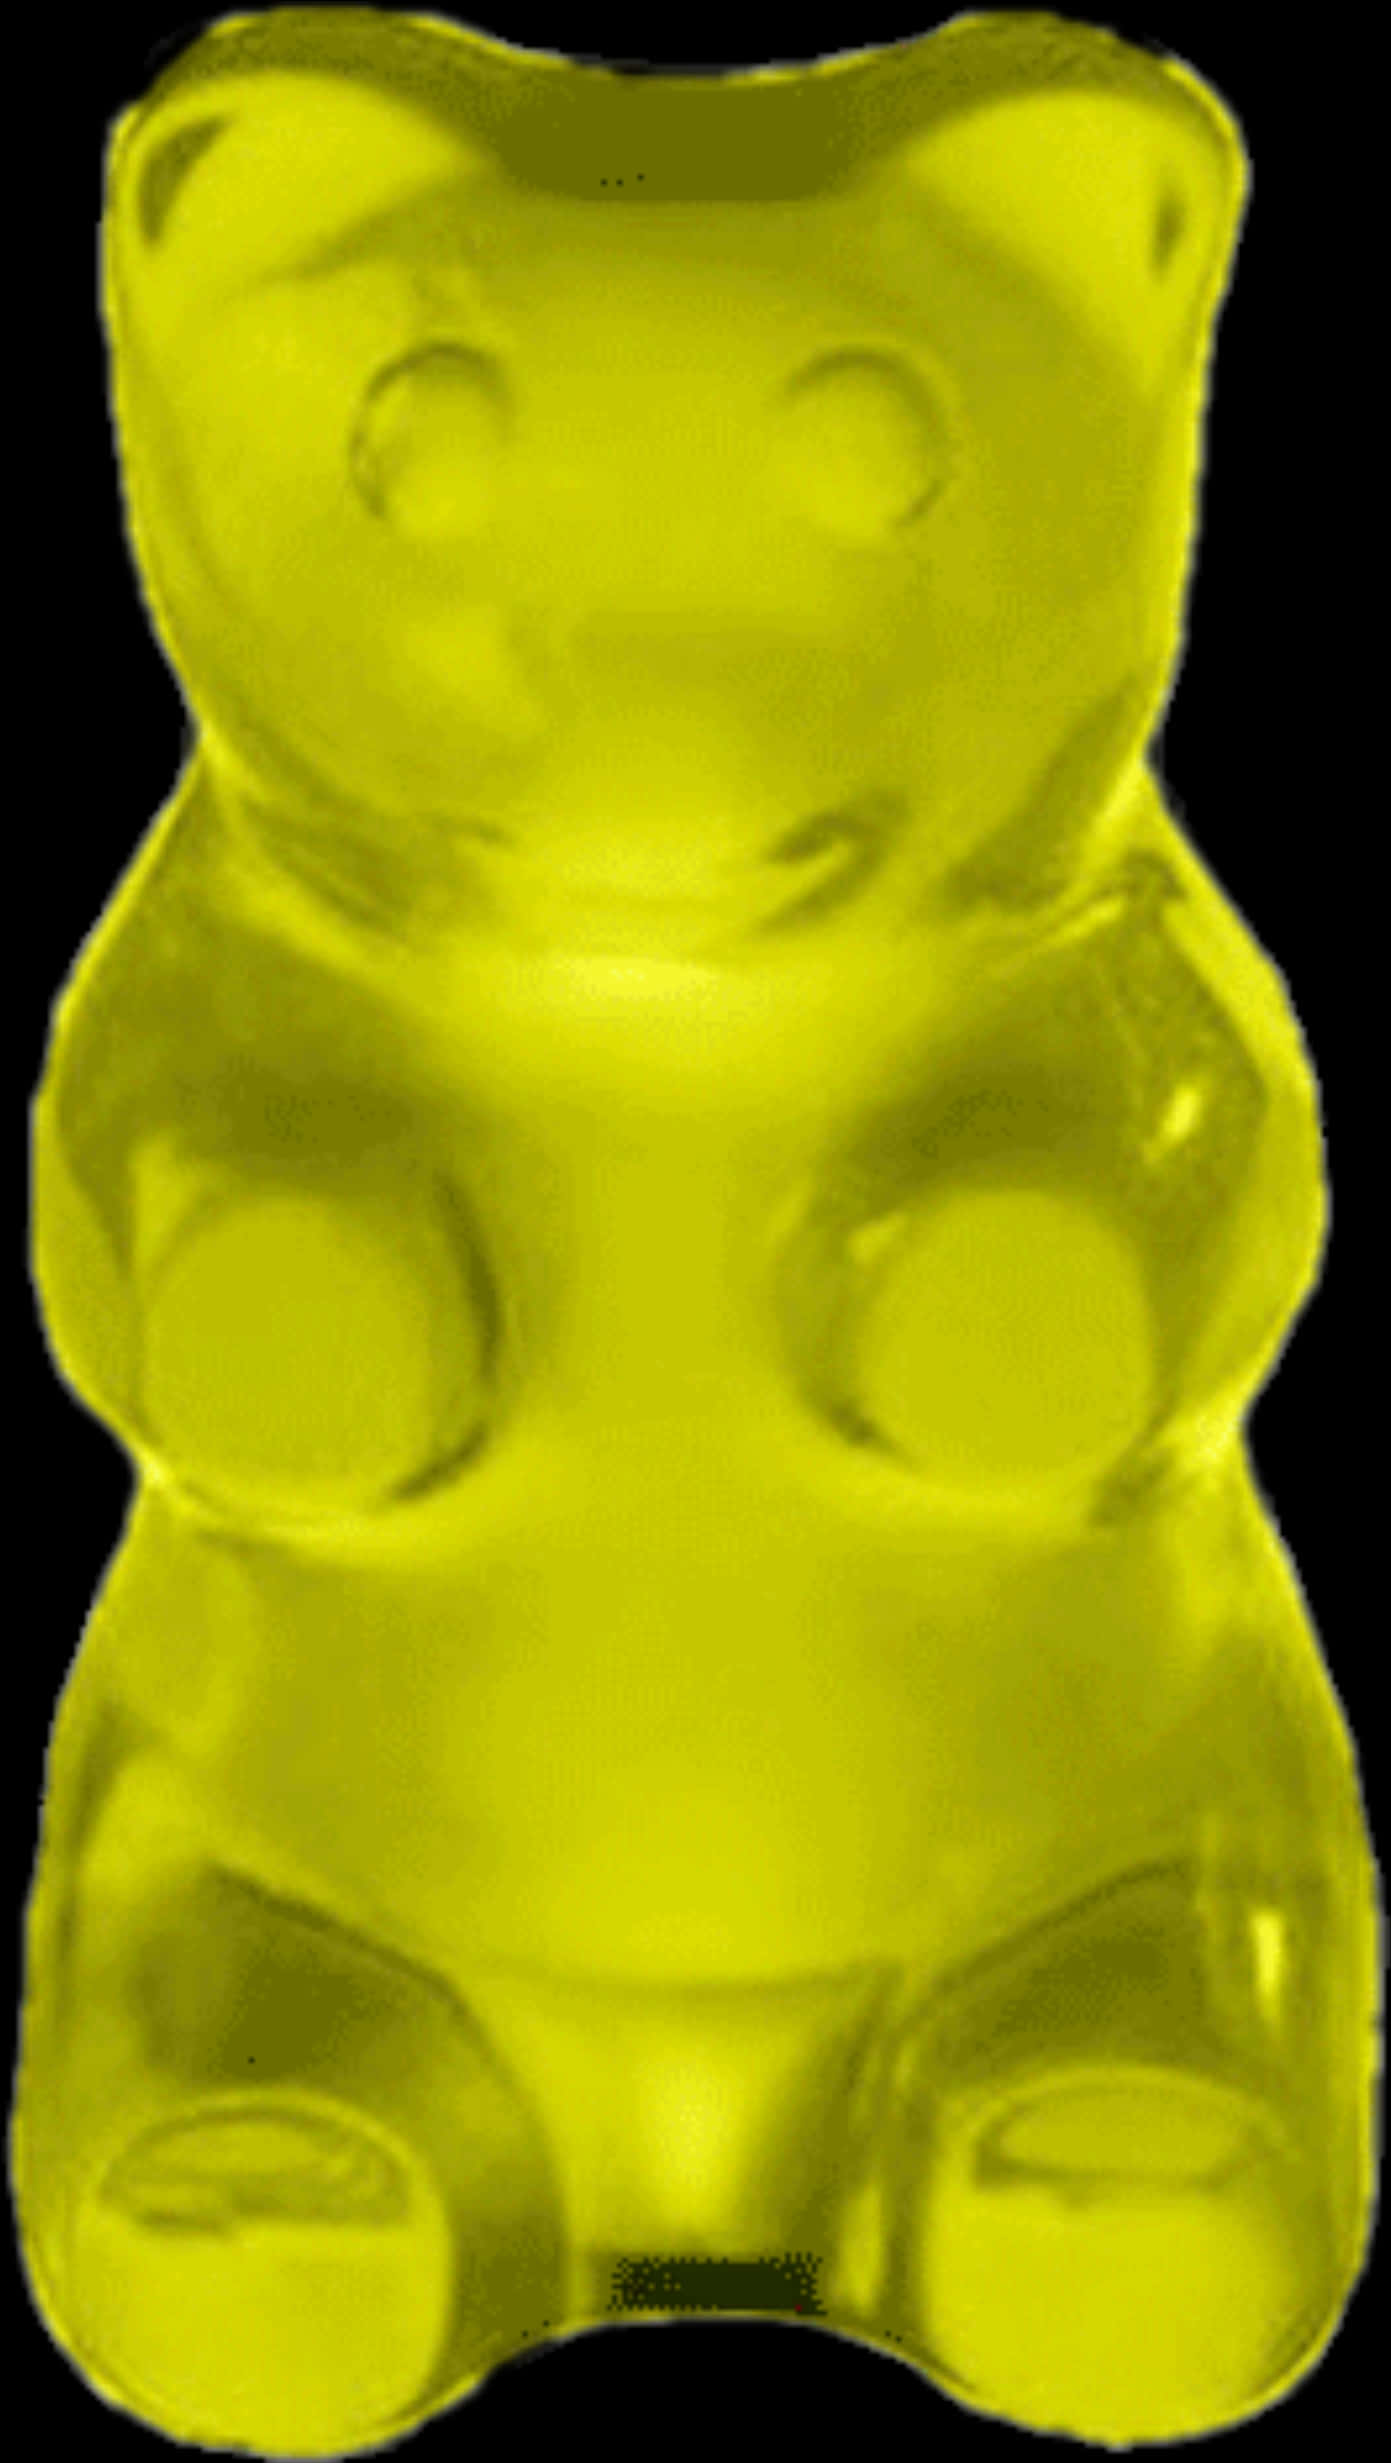 Yellow Gummy Bear Shaped Object